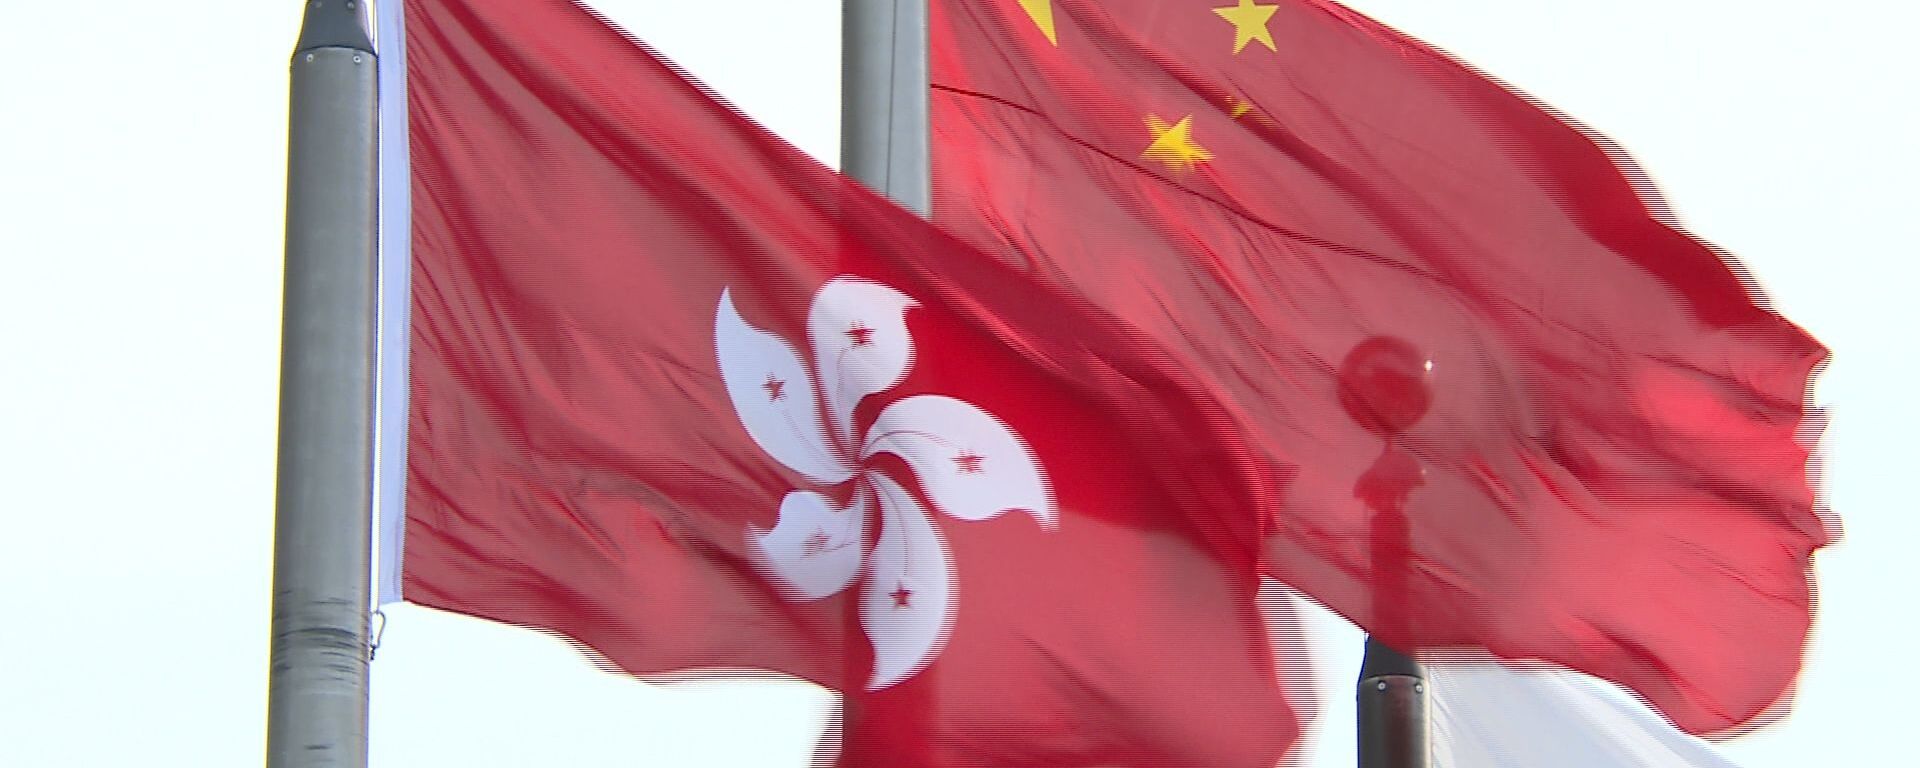 Banderas de Hong Kong y China - Sputnik Mundo, 1920, 30.03.2021